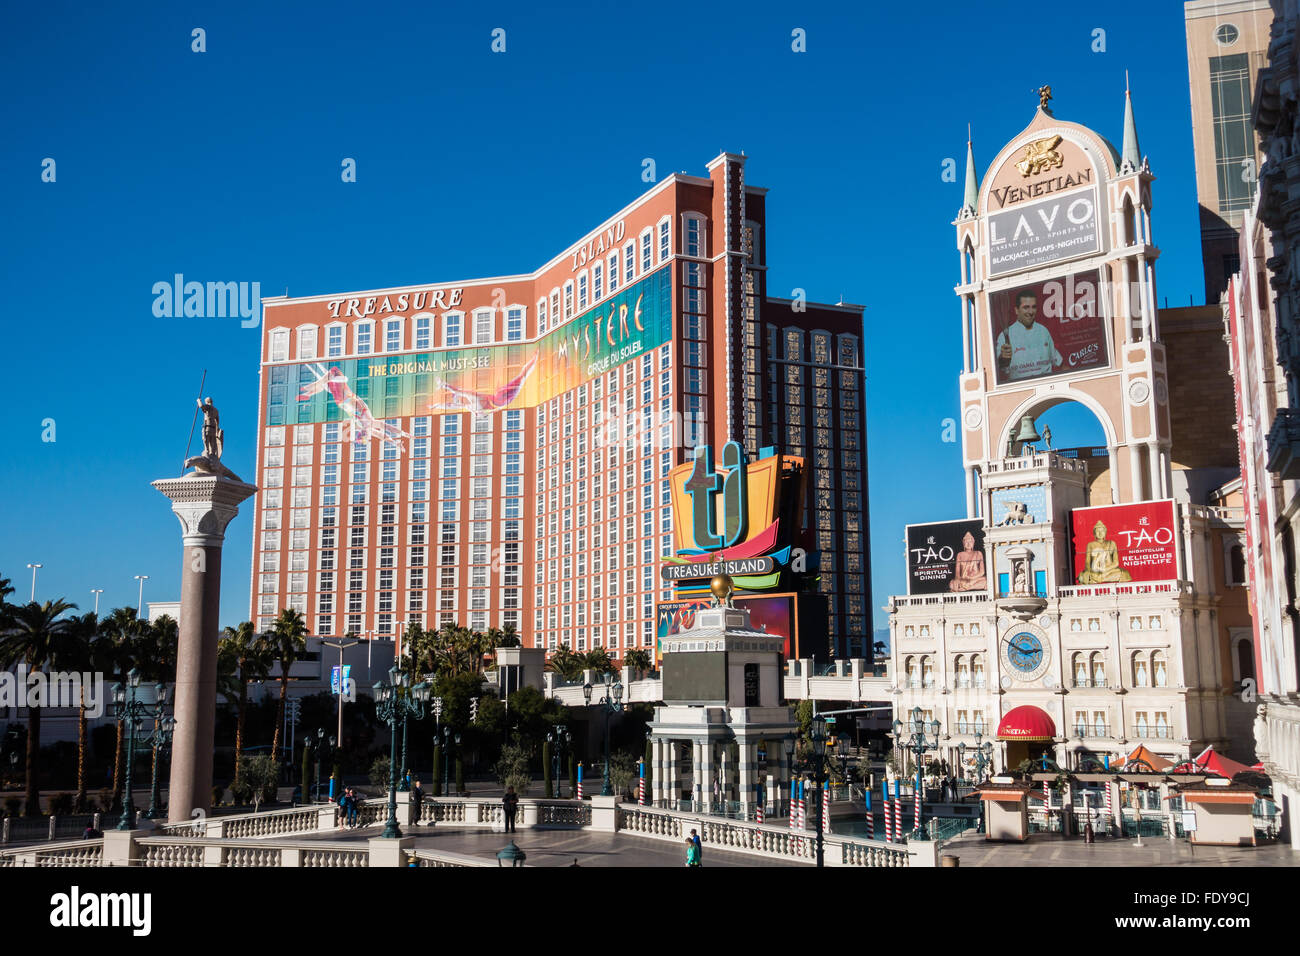 Treasure Island resort on the Las Vegas strip in Las Vegas, Nevada, USA Stock Photo